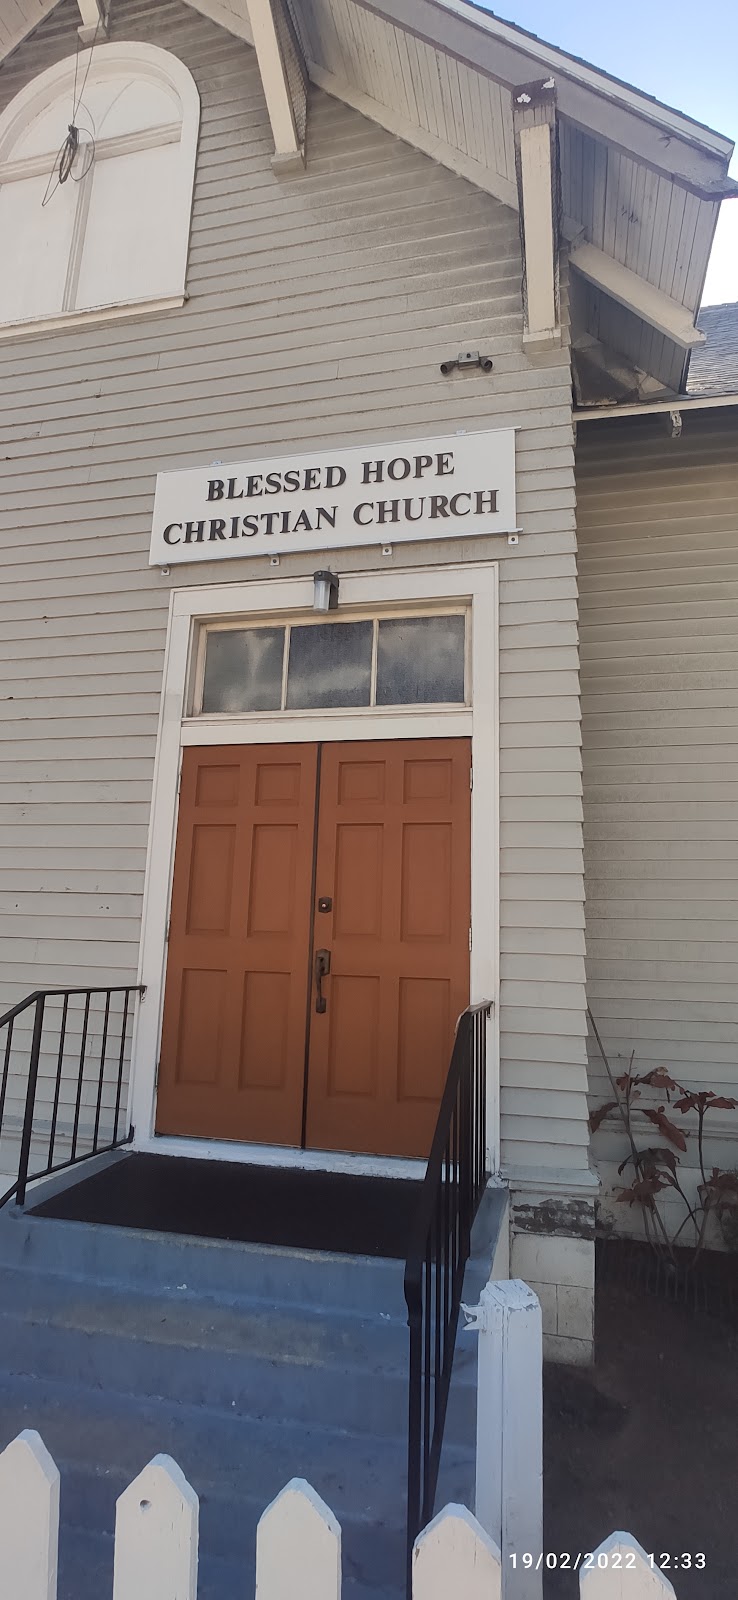 Blessed Hope Christian Church | 474 N Summit Ave, Pasadena, CA 91103, USA | Phone: (626) 578-0325